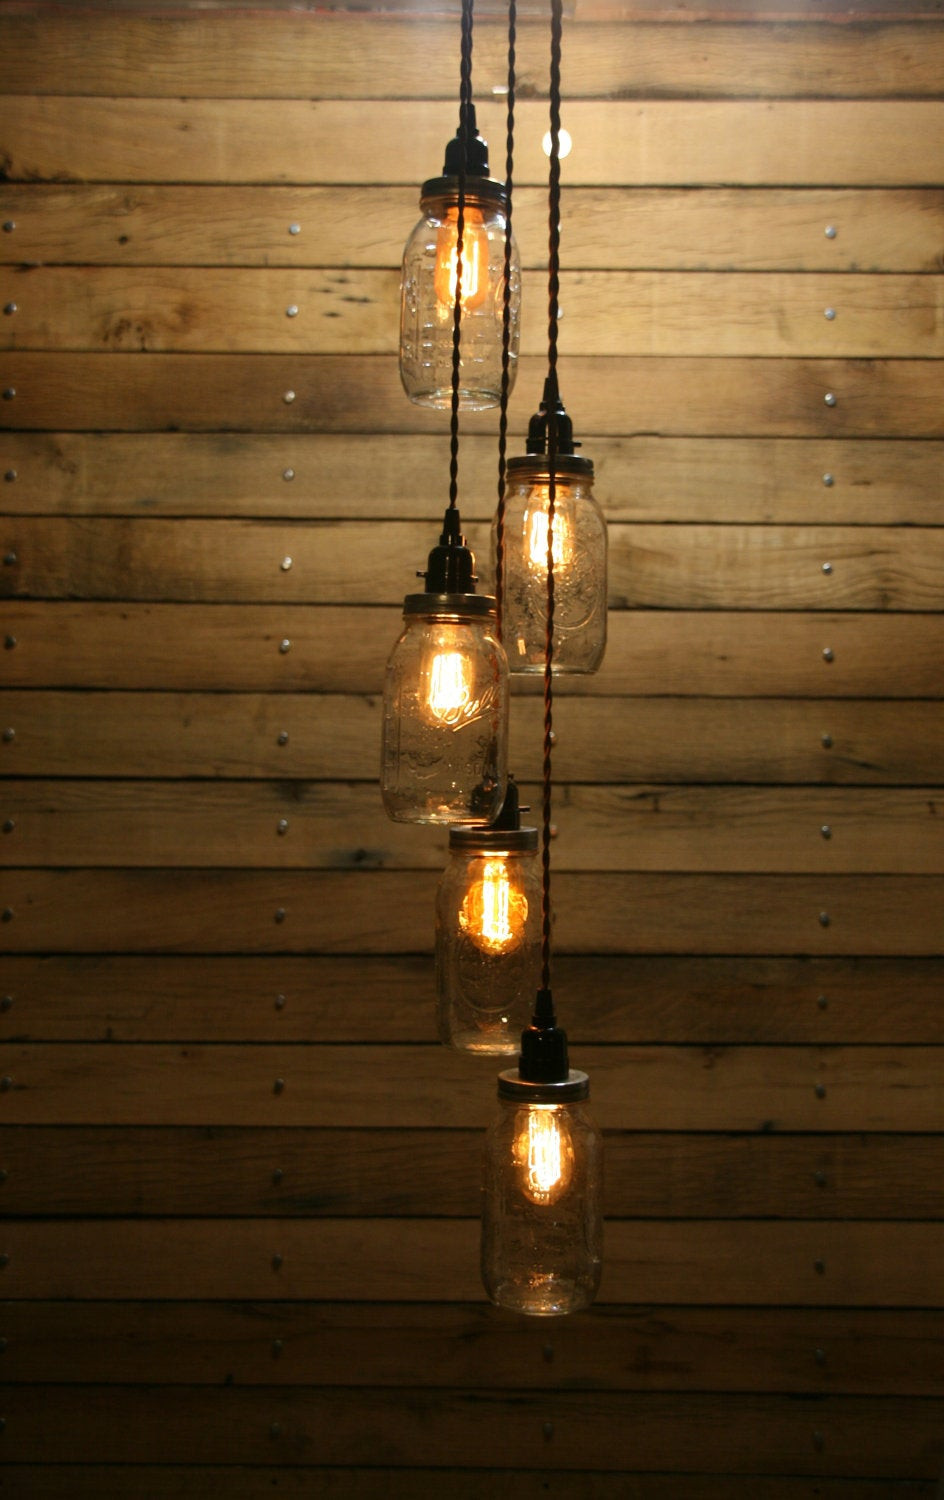 Best ideas about DIY Rustic Lighting
. Save or Pin DIY 5 Jar Pendant Light Mason Jar Chandelier by Now.